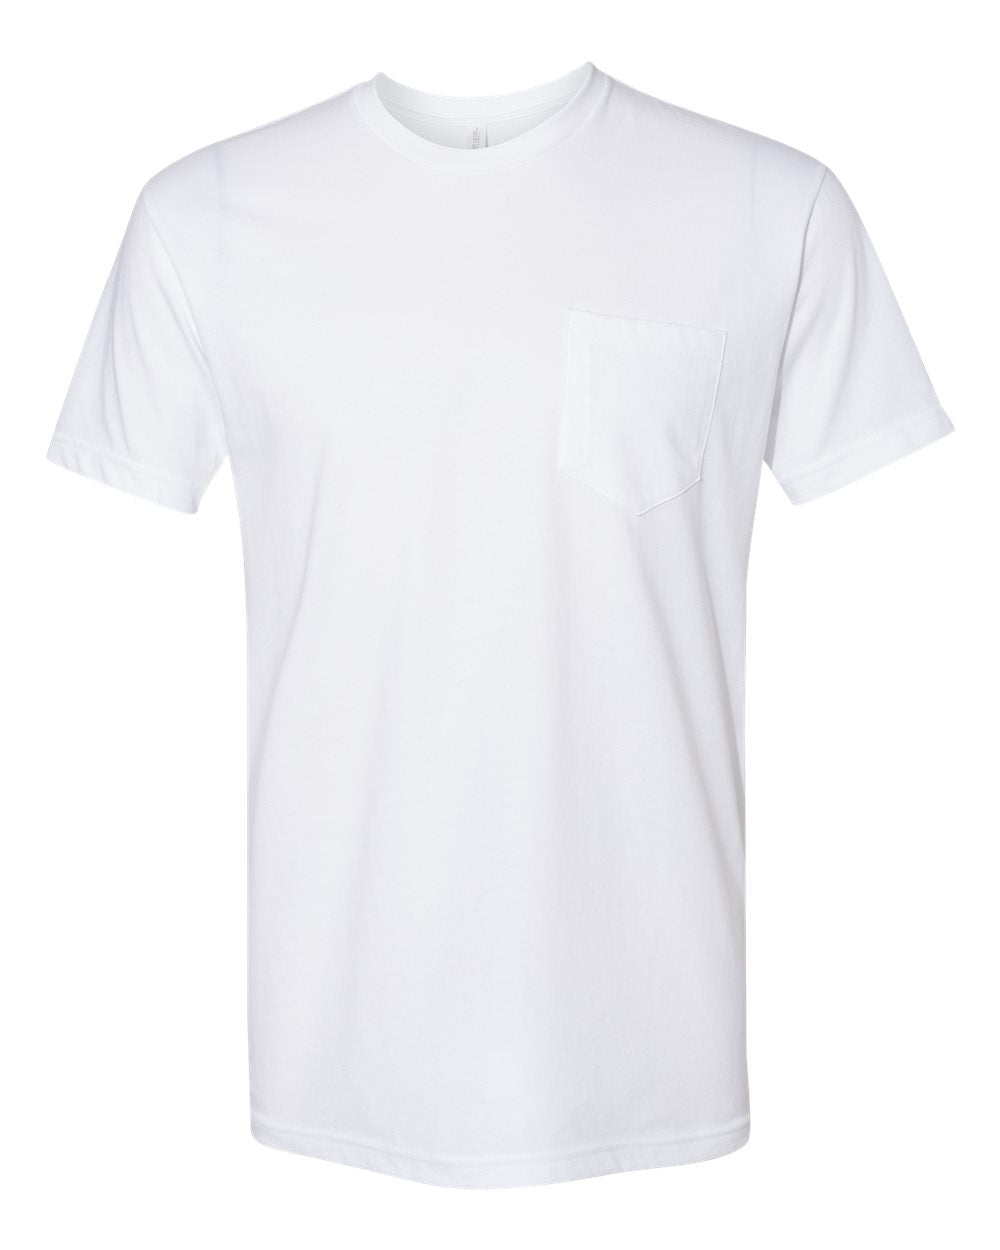 Next Level Cotton Pocket T-Shirt